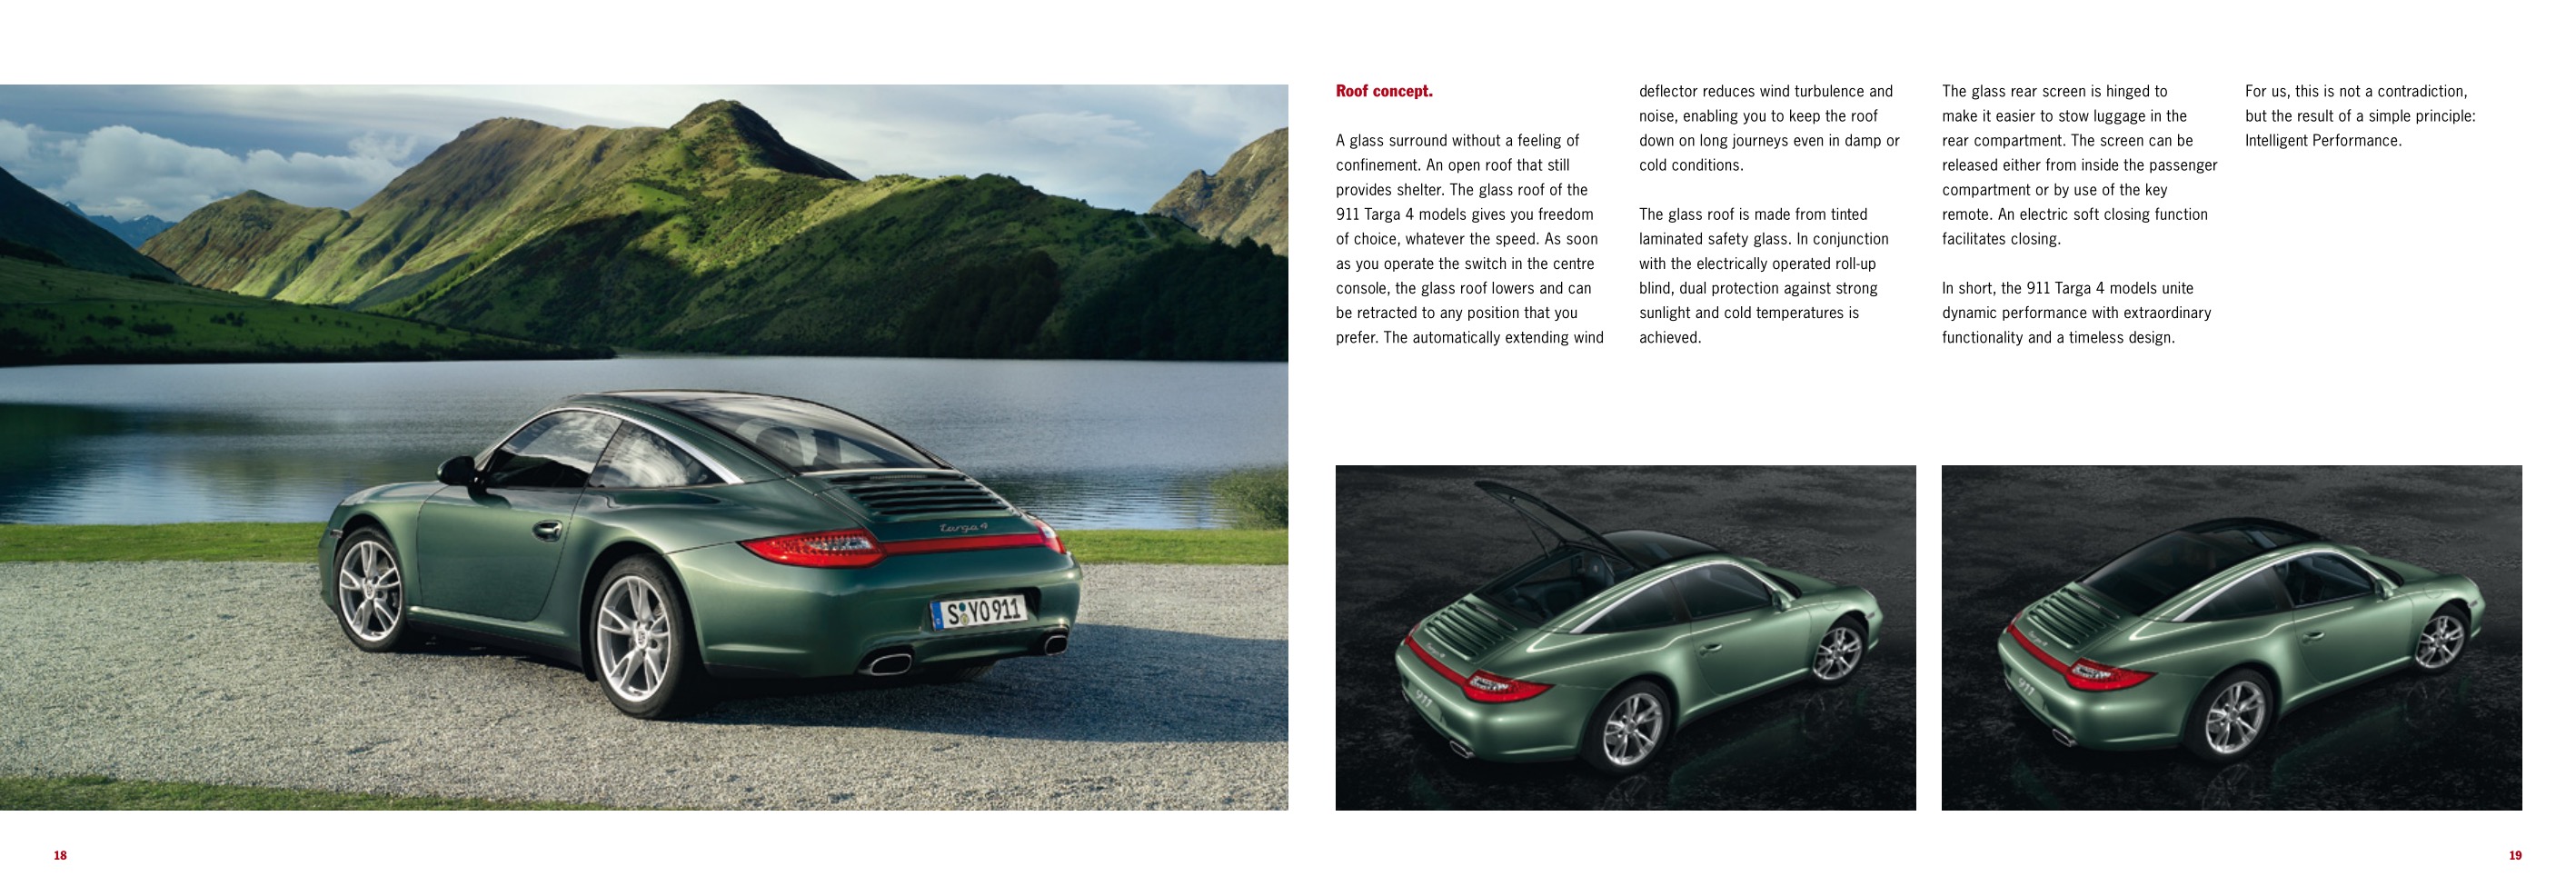 2012 Porsche 911 997 Brochure Page 5